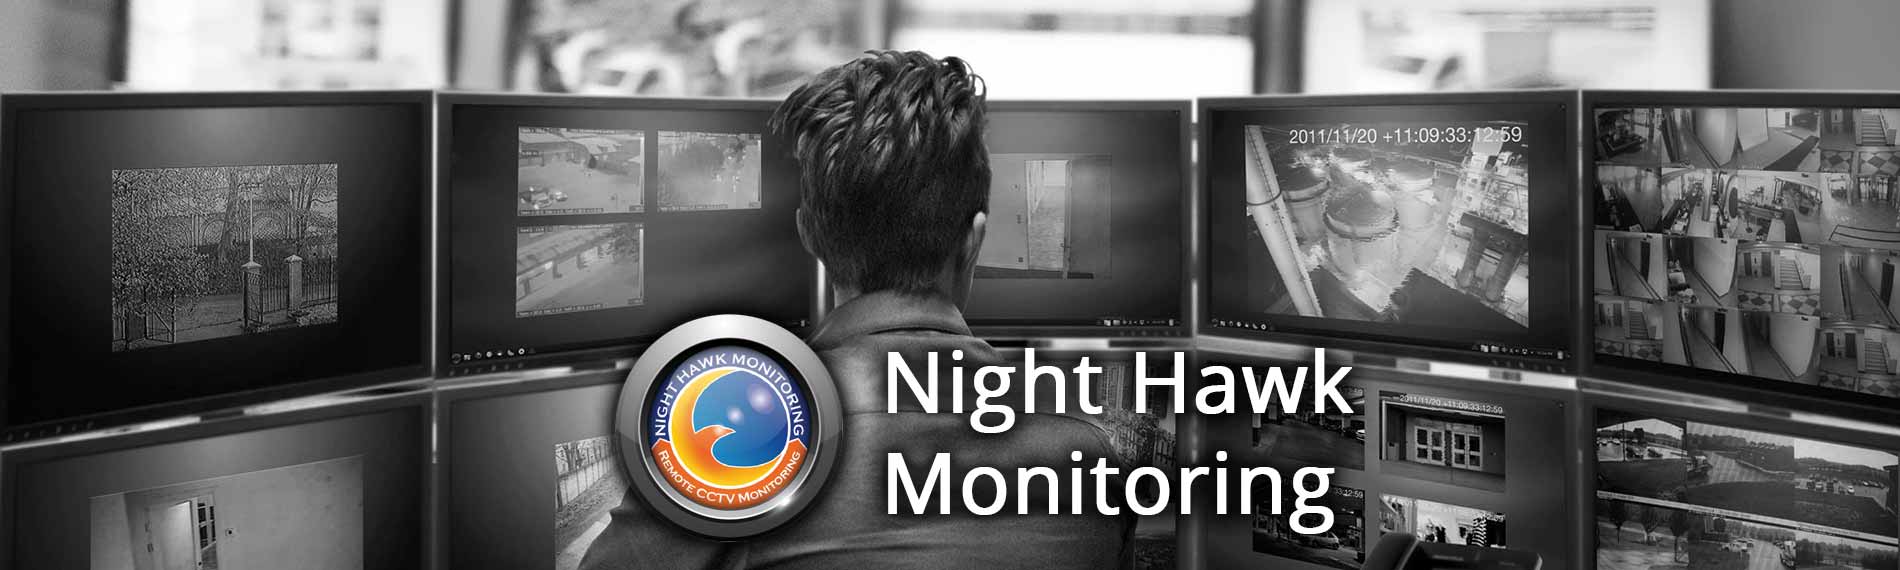 Remote Video Surveillance Tucson - Live Security Cameras Monitoring Tucson Arizona